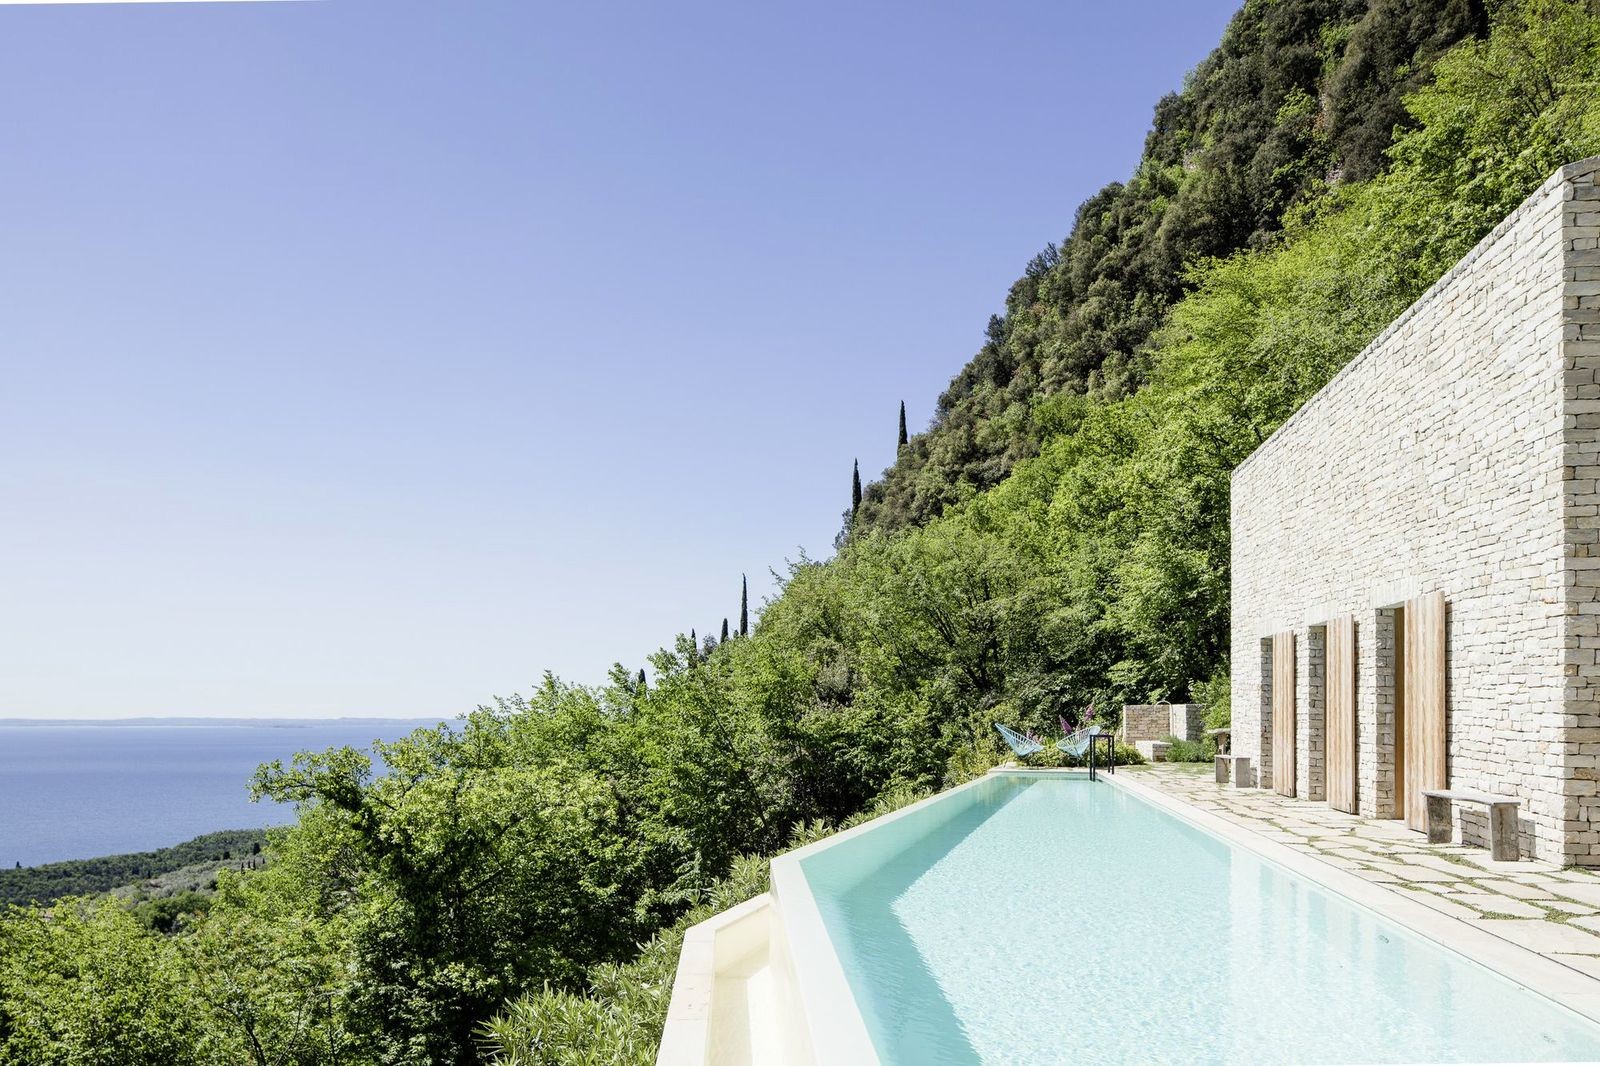  House over Lake Garda